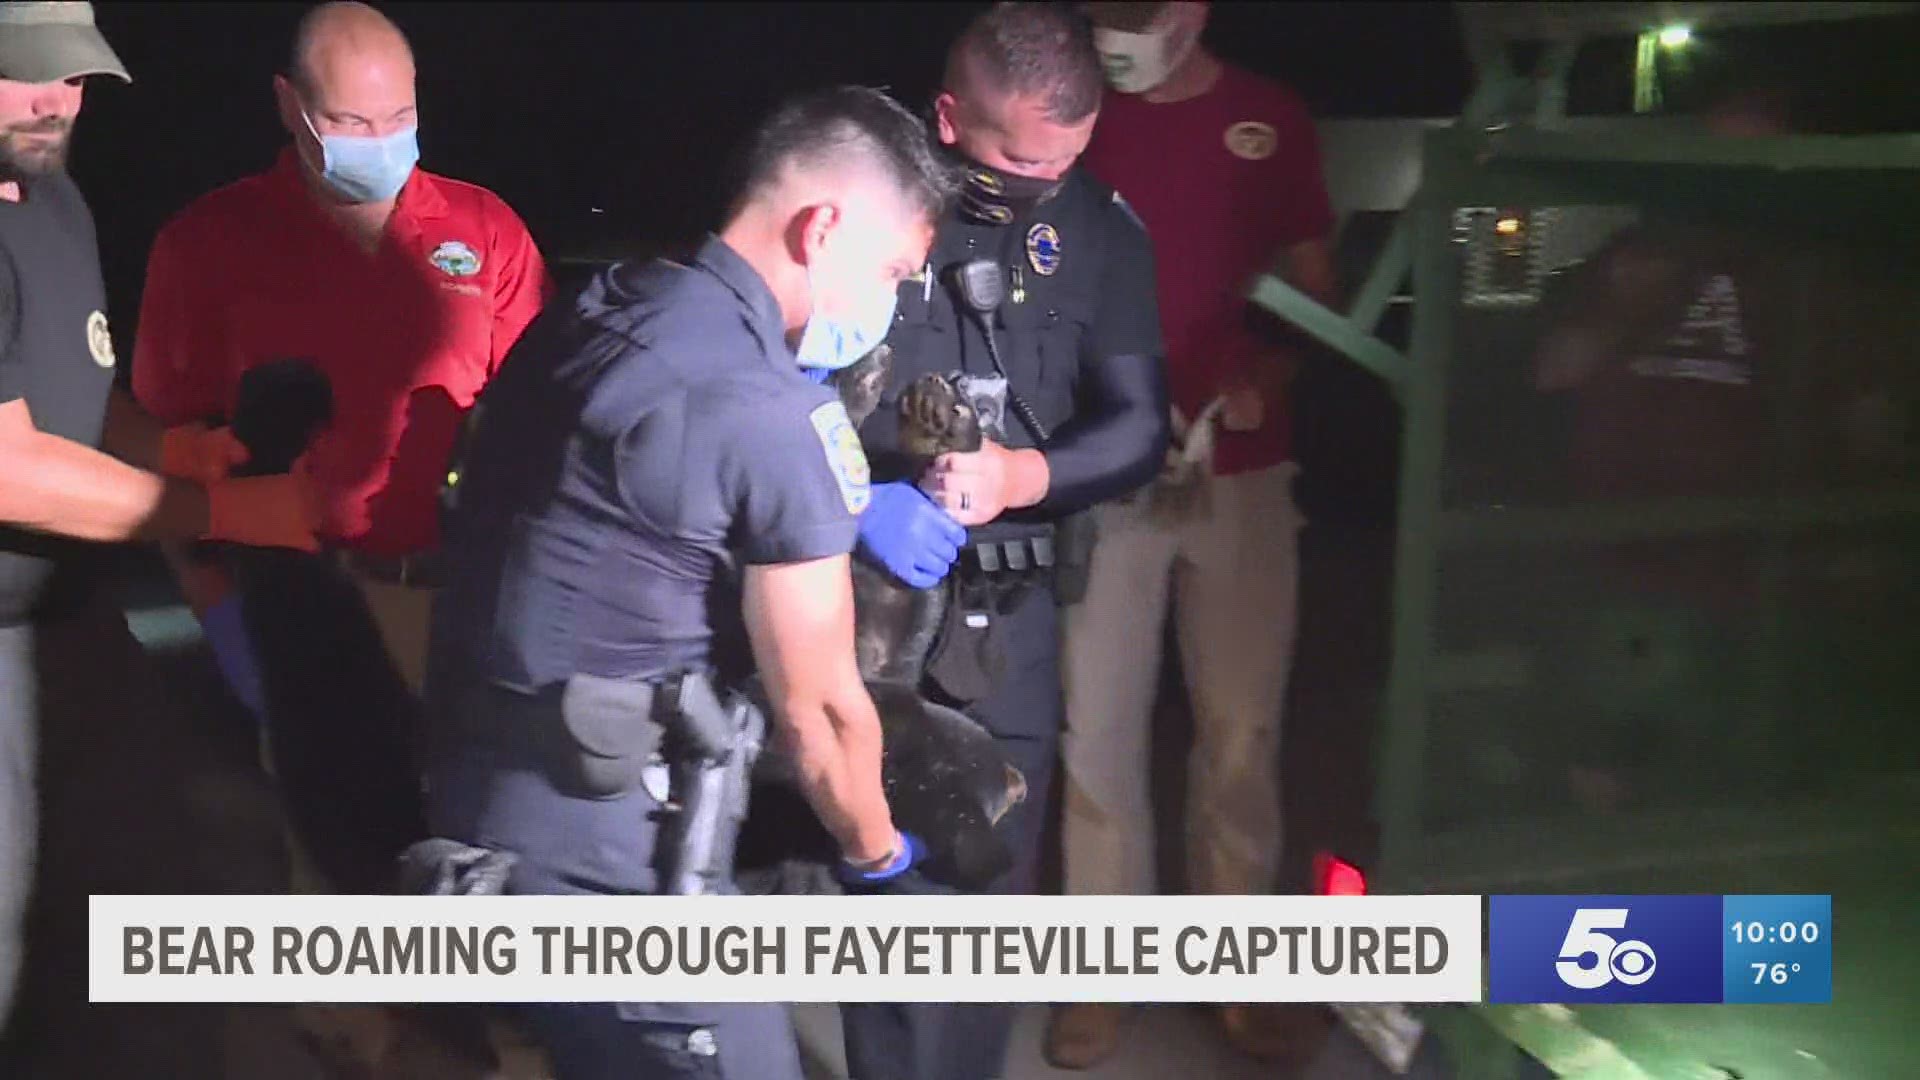 Bear roaming through Fayetteville captured